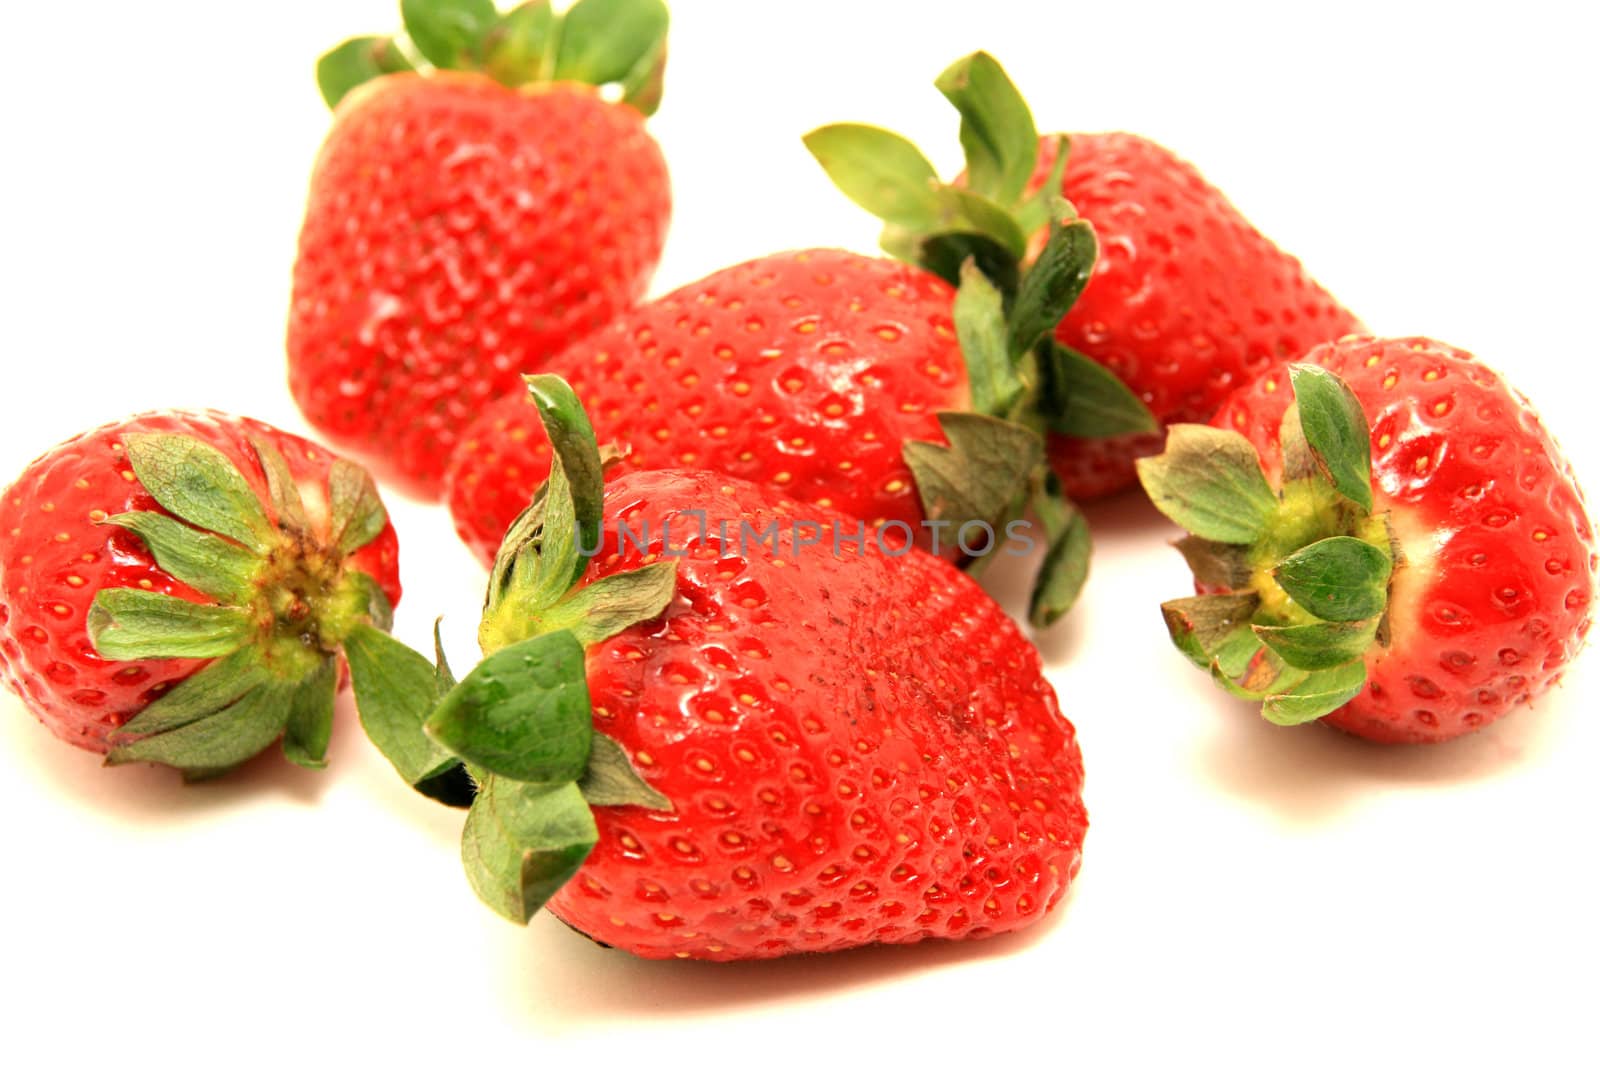 strawberries by jpcasais